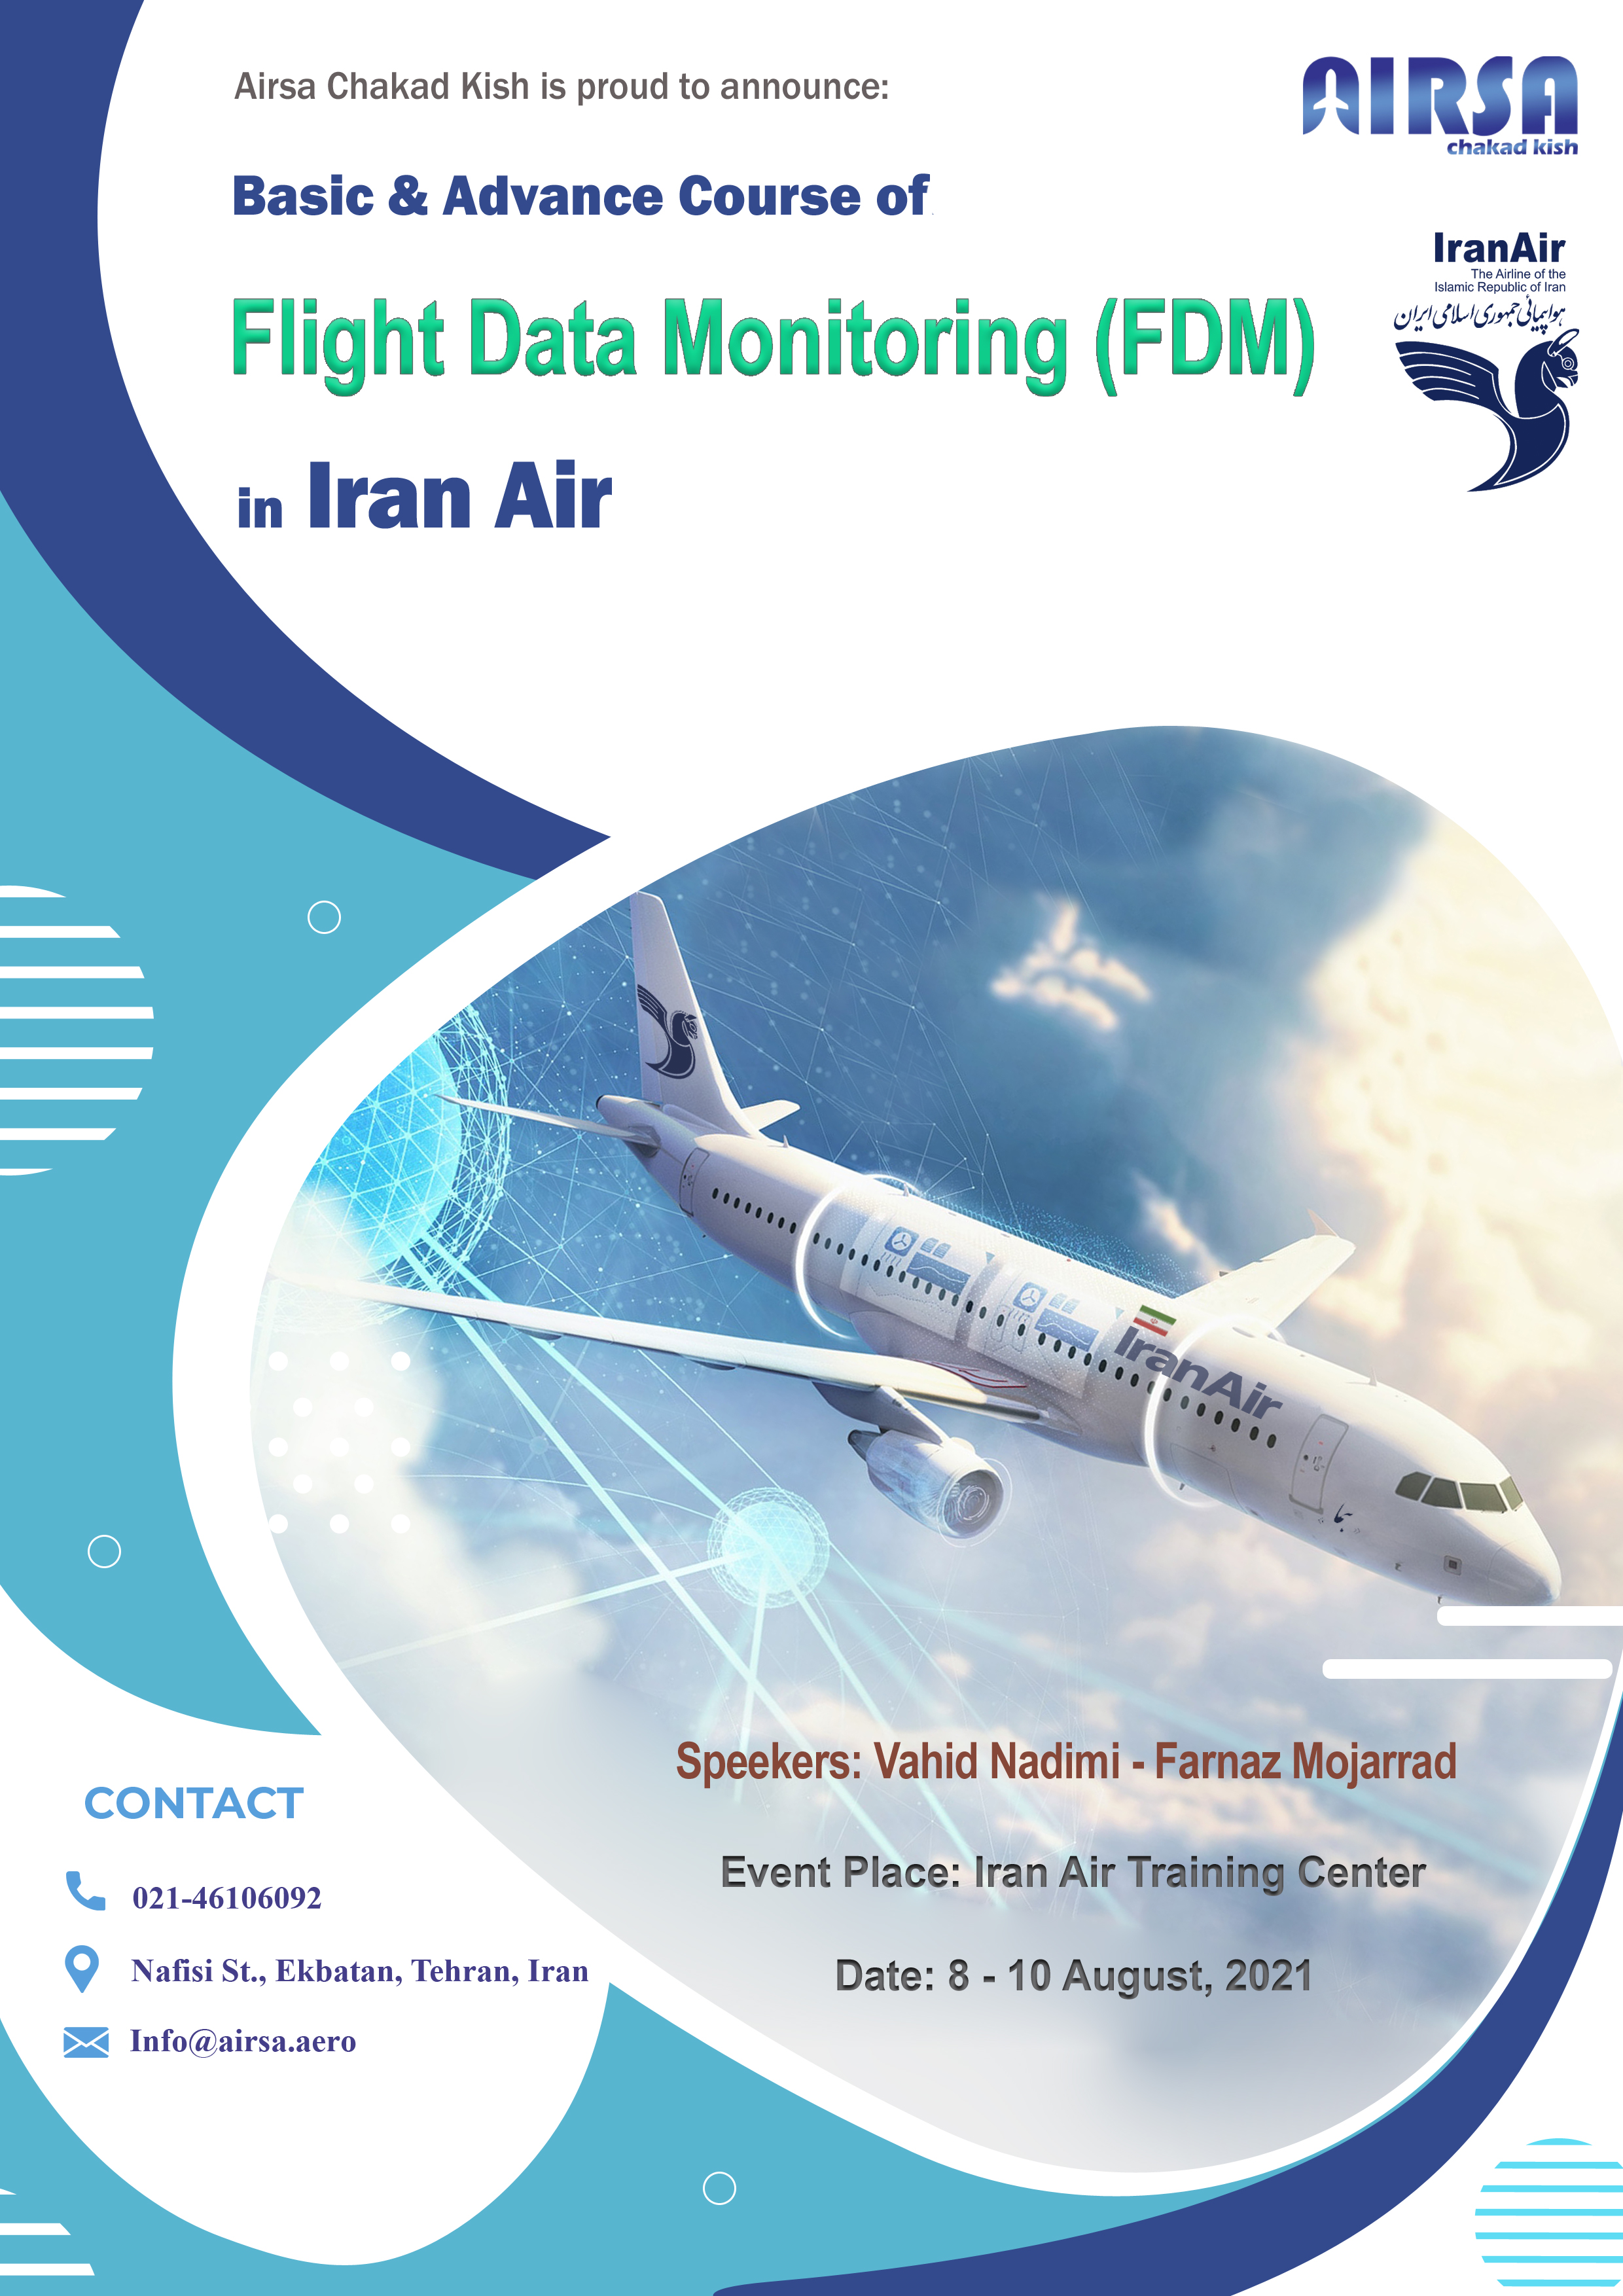 Flight Data Monitoring (FDM) training course for Iran Air